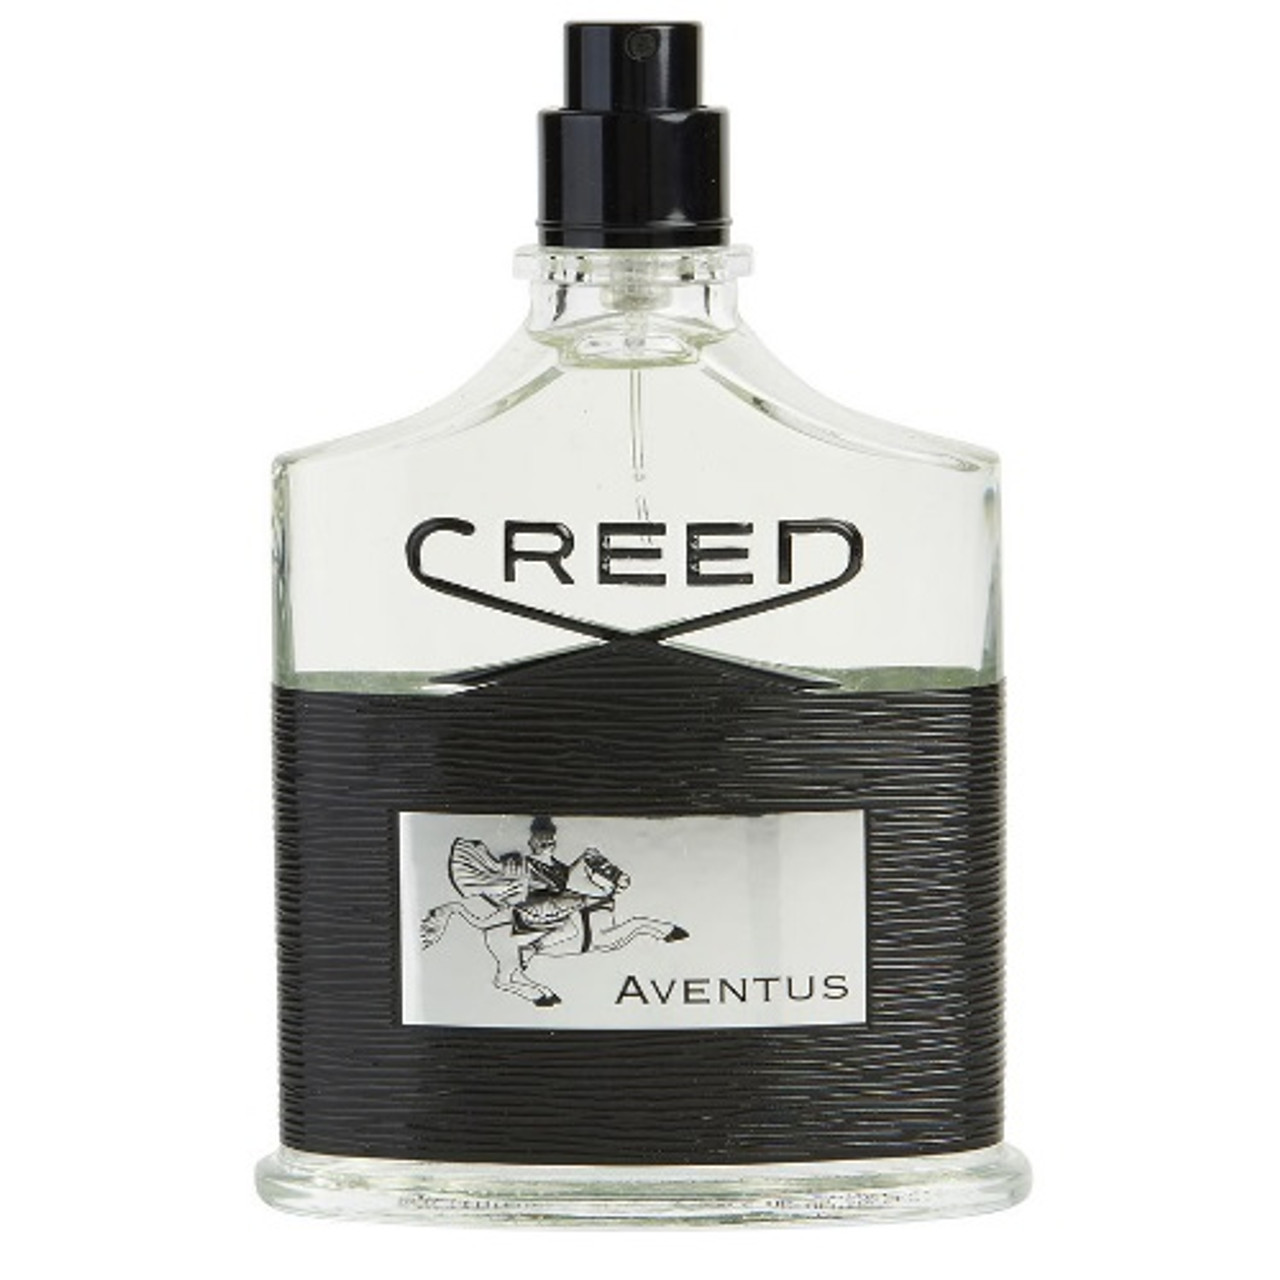 Купить авентус мужской. Creed Aventus мужской 100ml. Creed Aventus 100ml тестер. Creed Aventus men's 100 ml. Крид Авентус духи мужские.